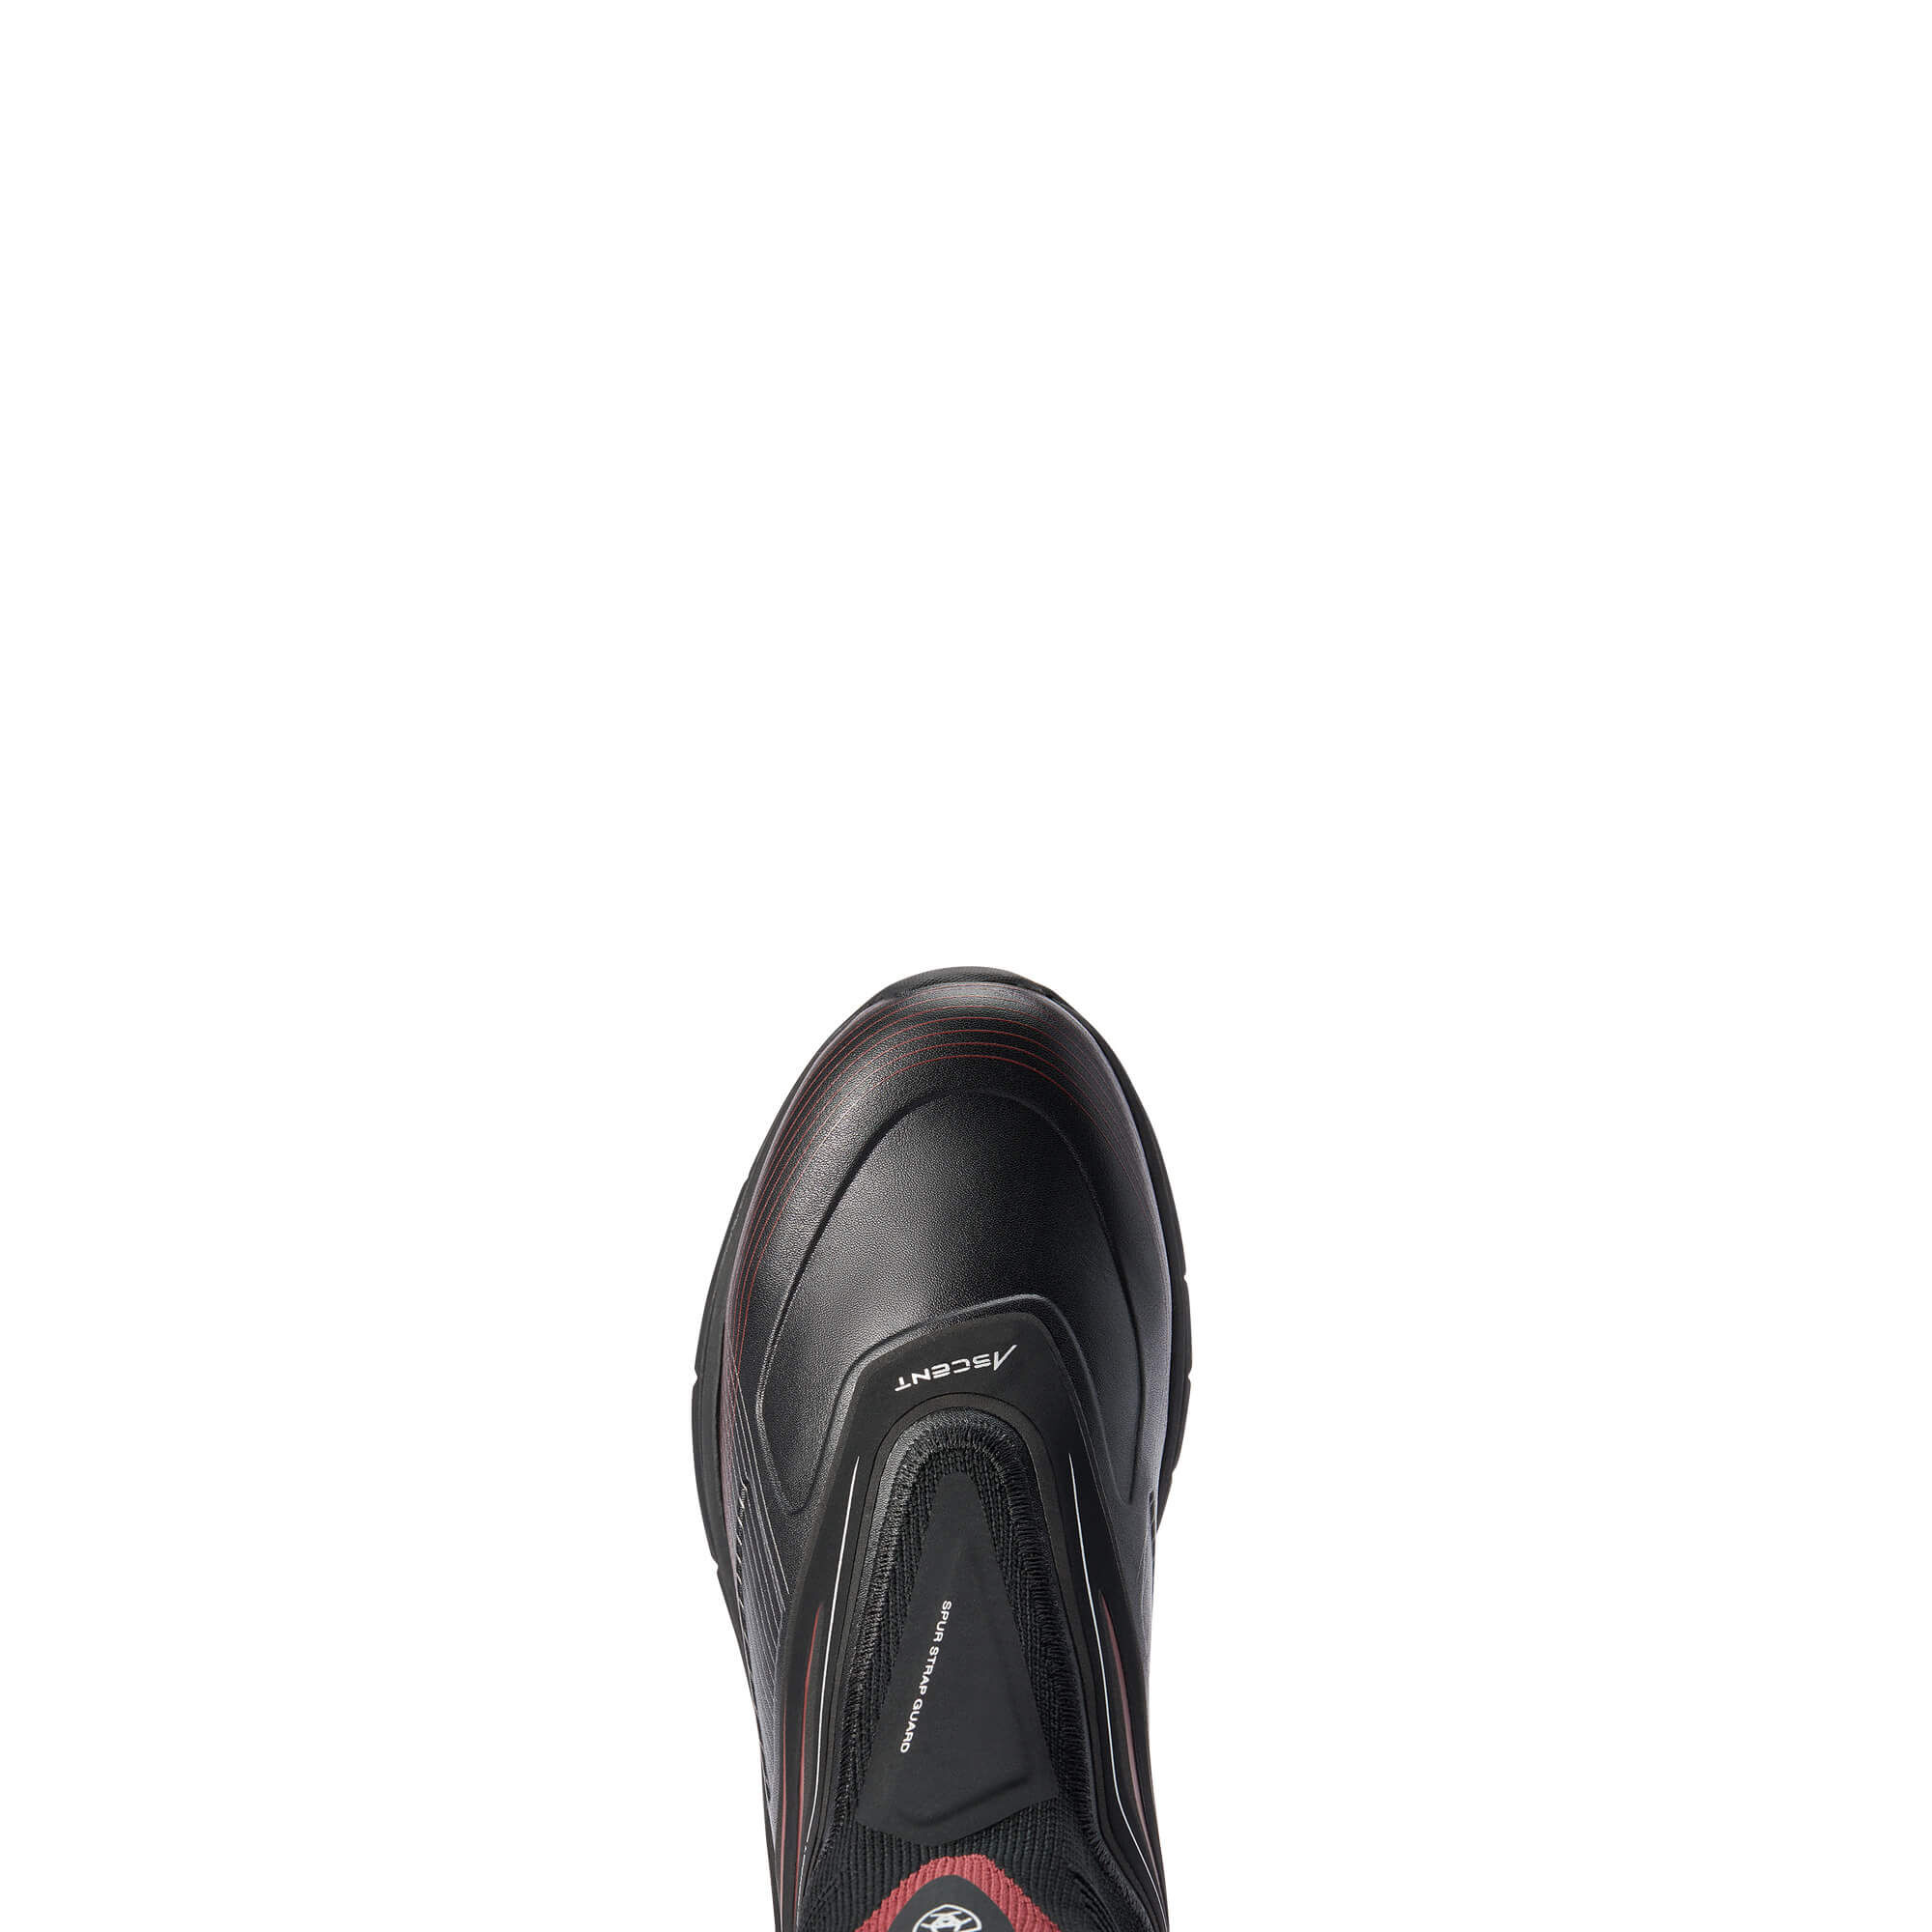 Black Sizes 4.5 to 7 UK Ariat Ascent Women's Paddock Jodhpur Boots 